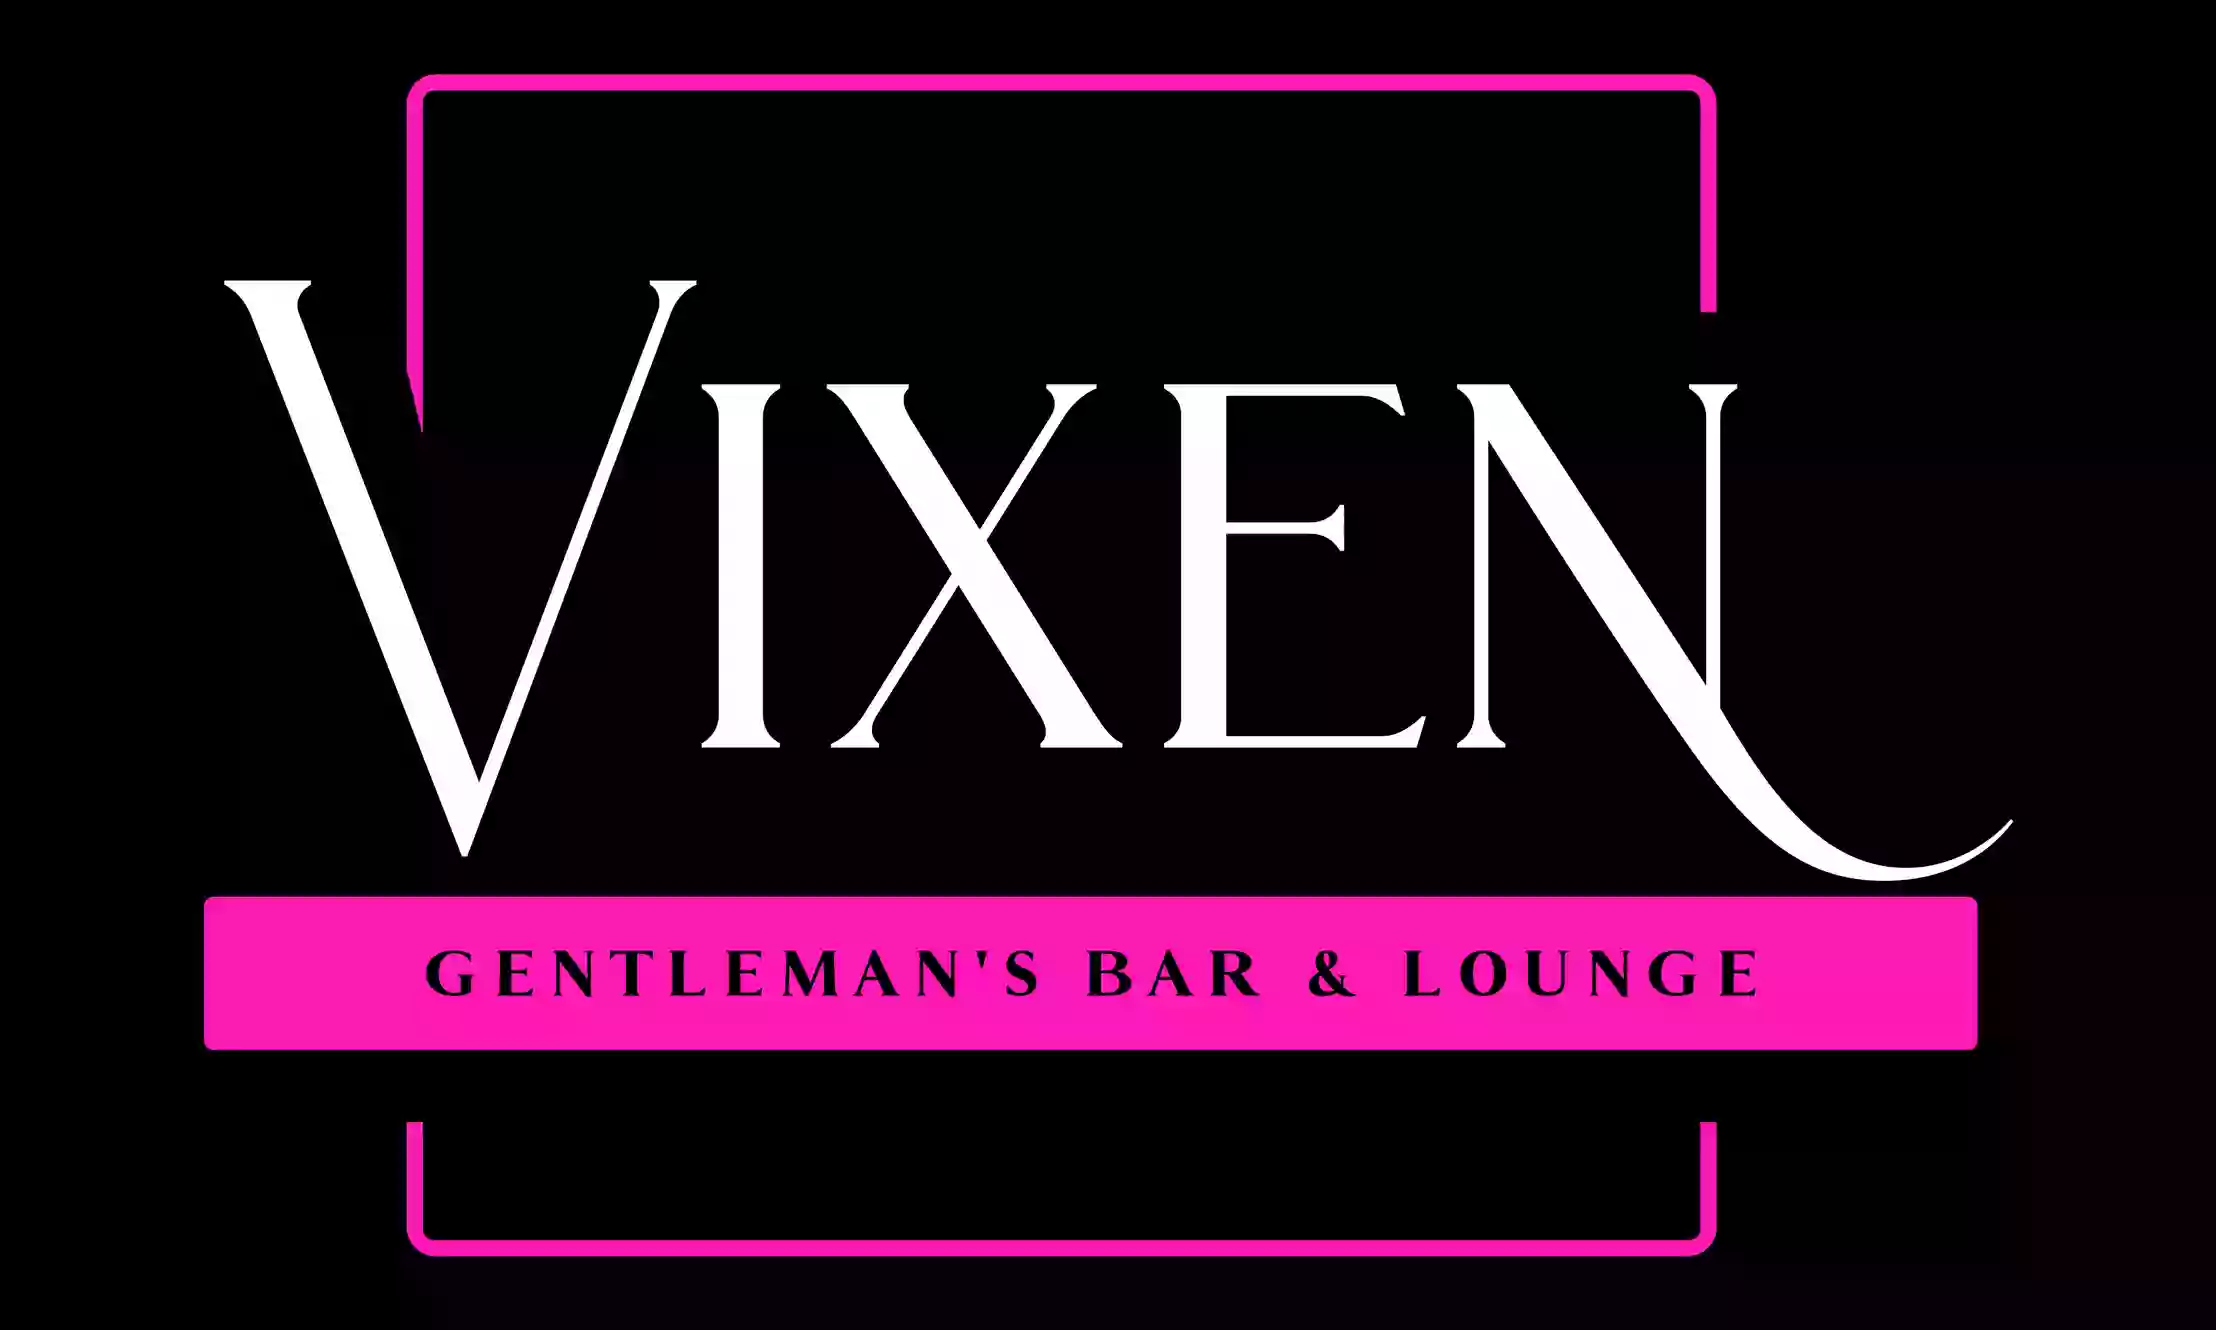 Club Vixen - Gentleman's Bar and Lounge